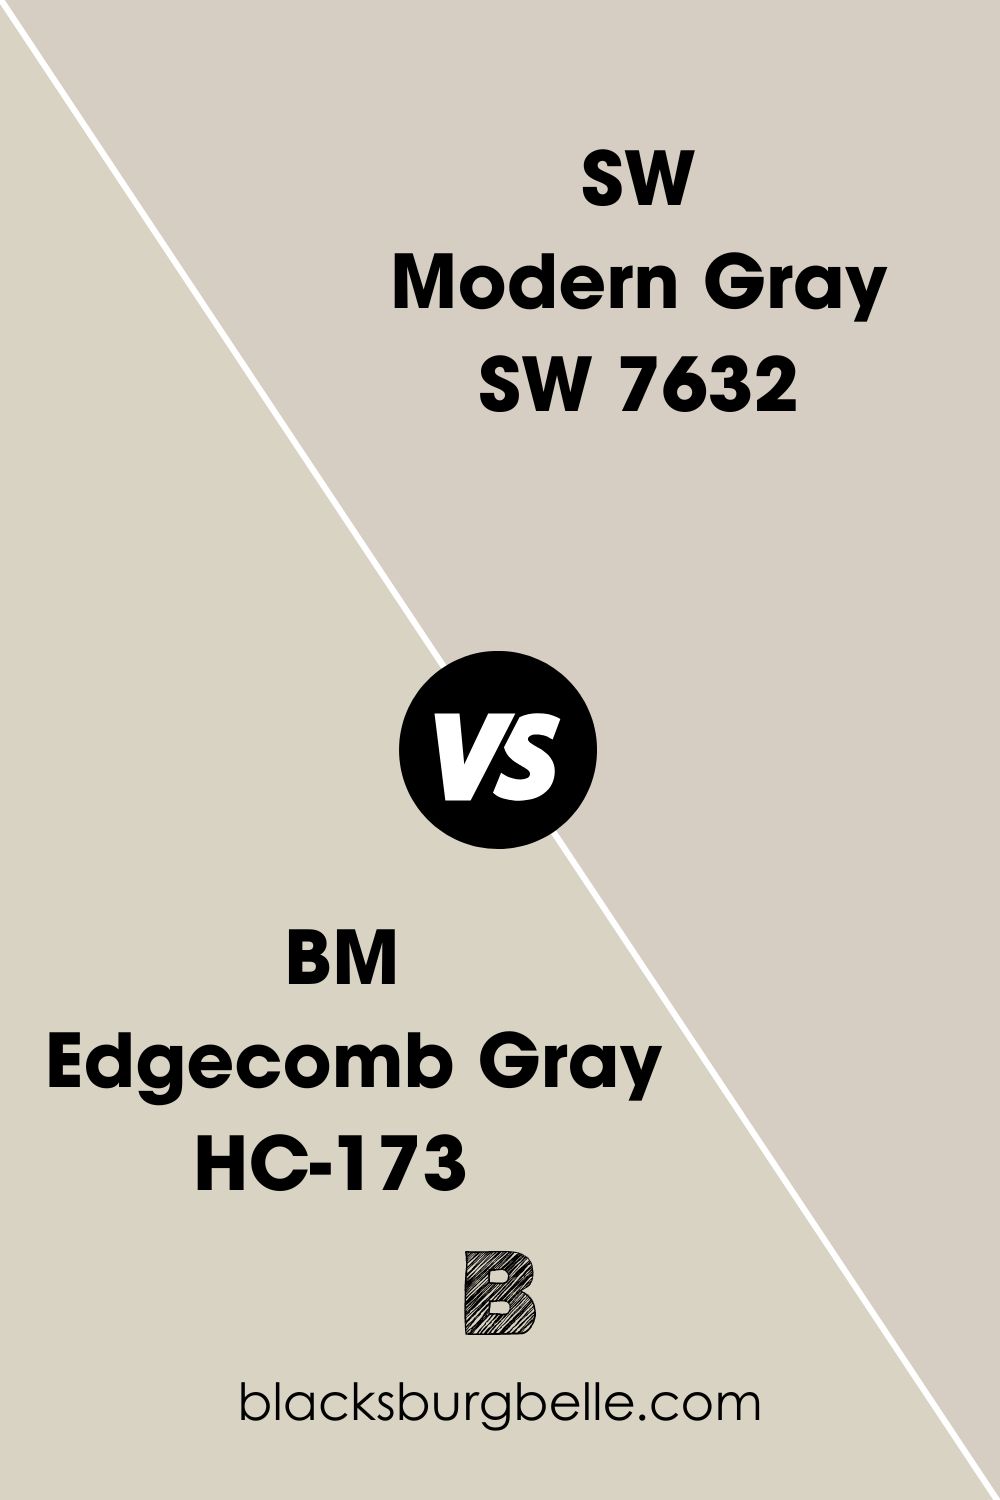 SW Modern Gray vs BM Edgecomb Gray